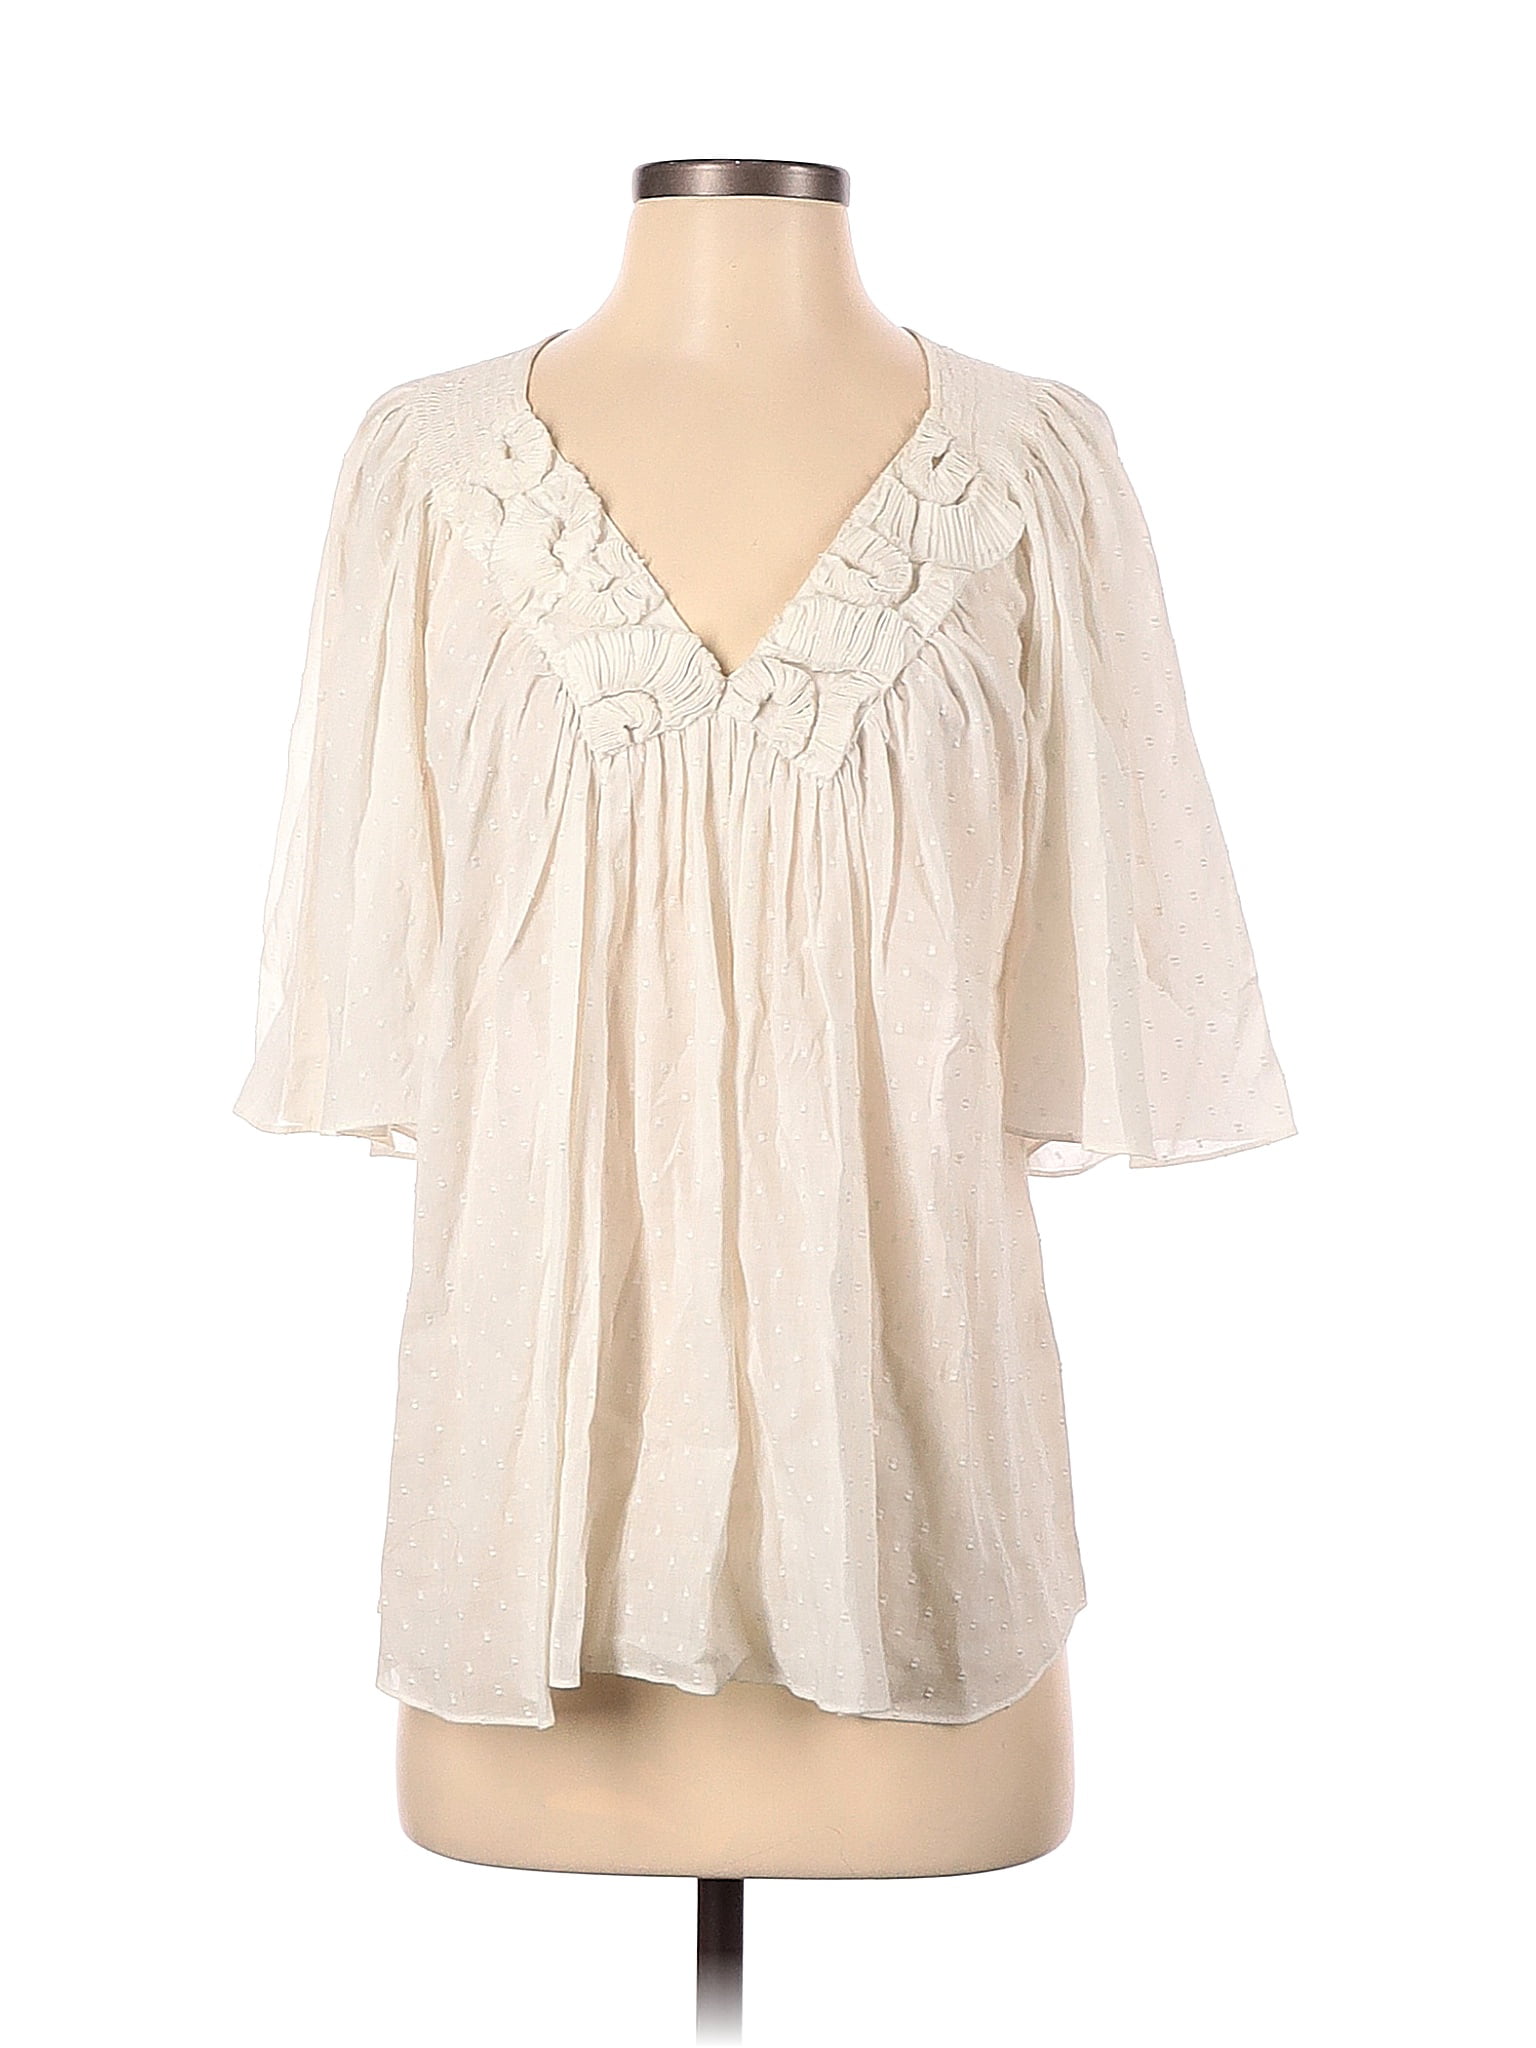 Pre-Owned Rebecca Taylor Women's Size 2 Short Sleeve Blouse - Walmart.com